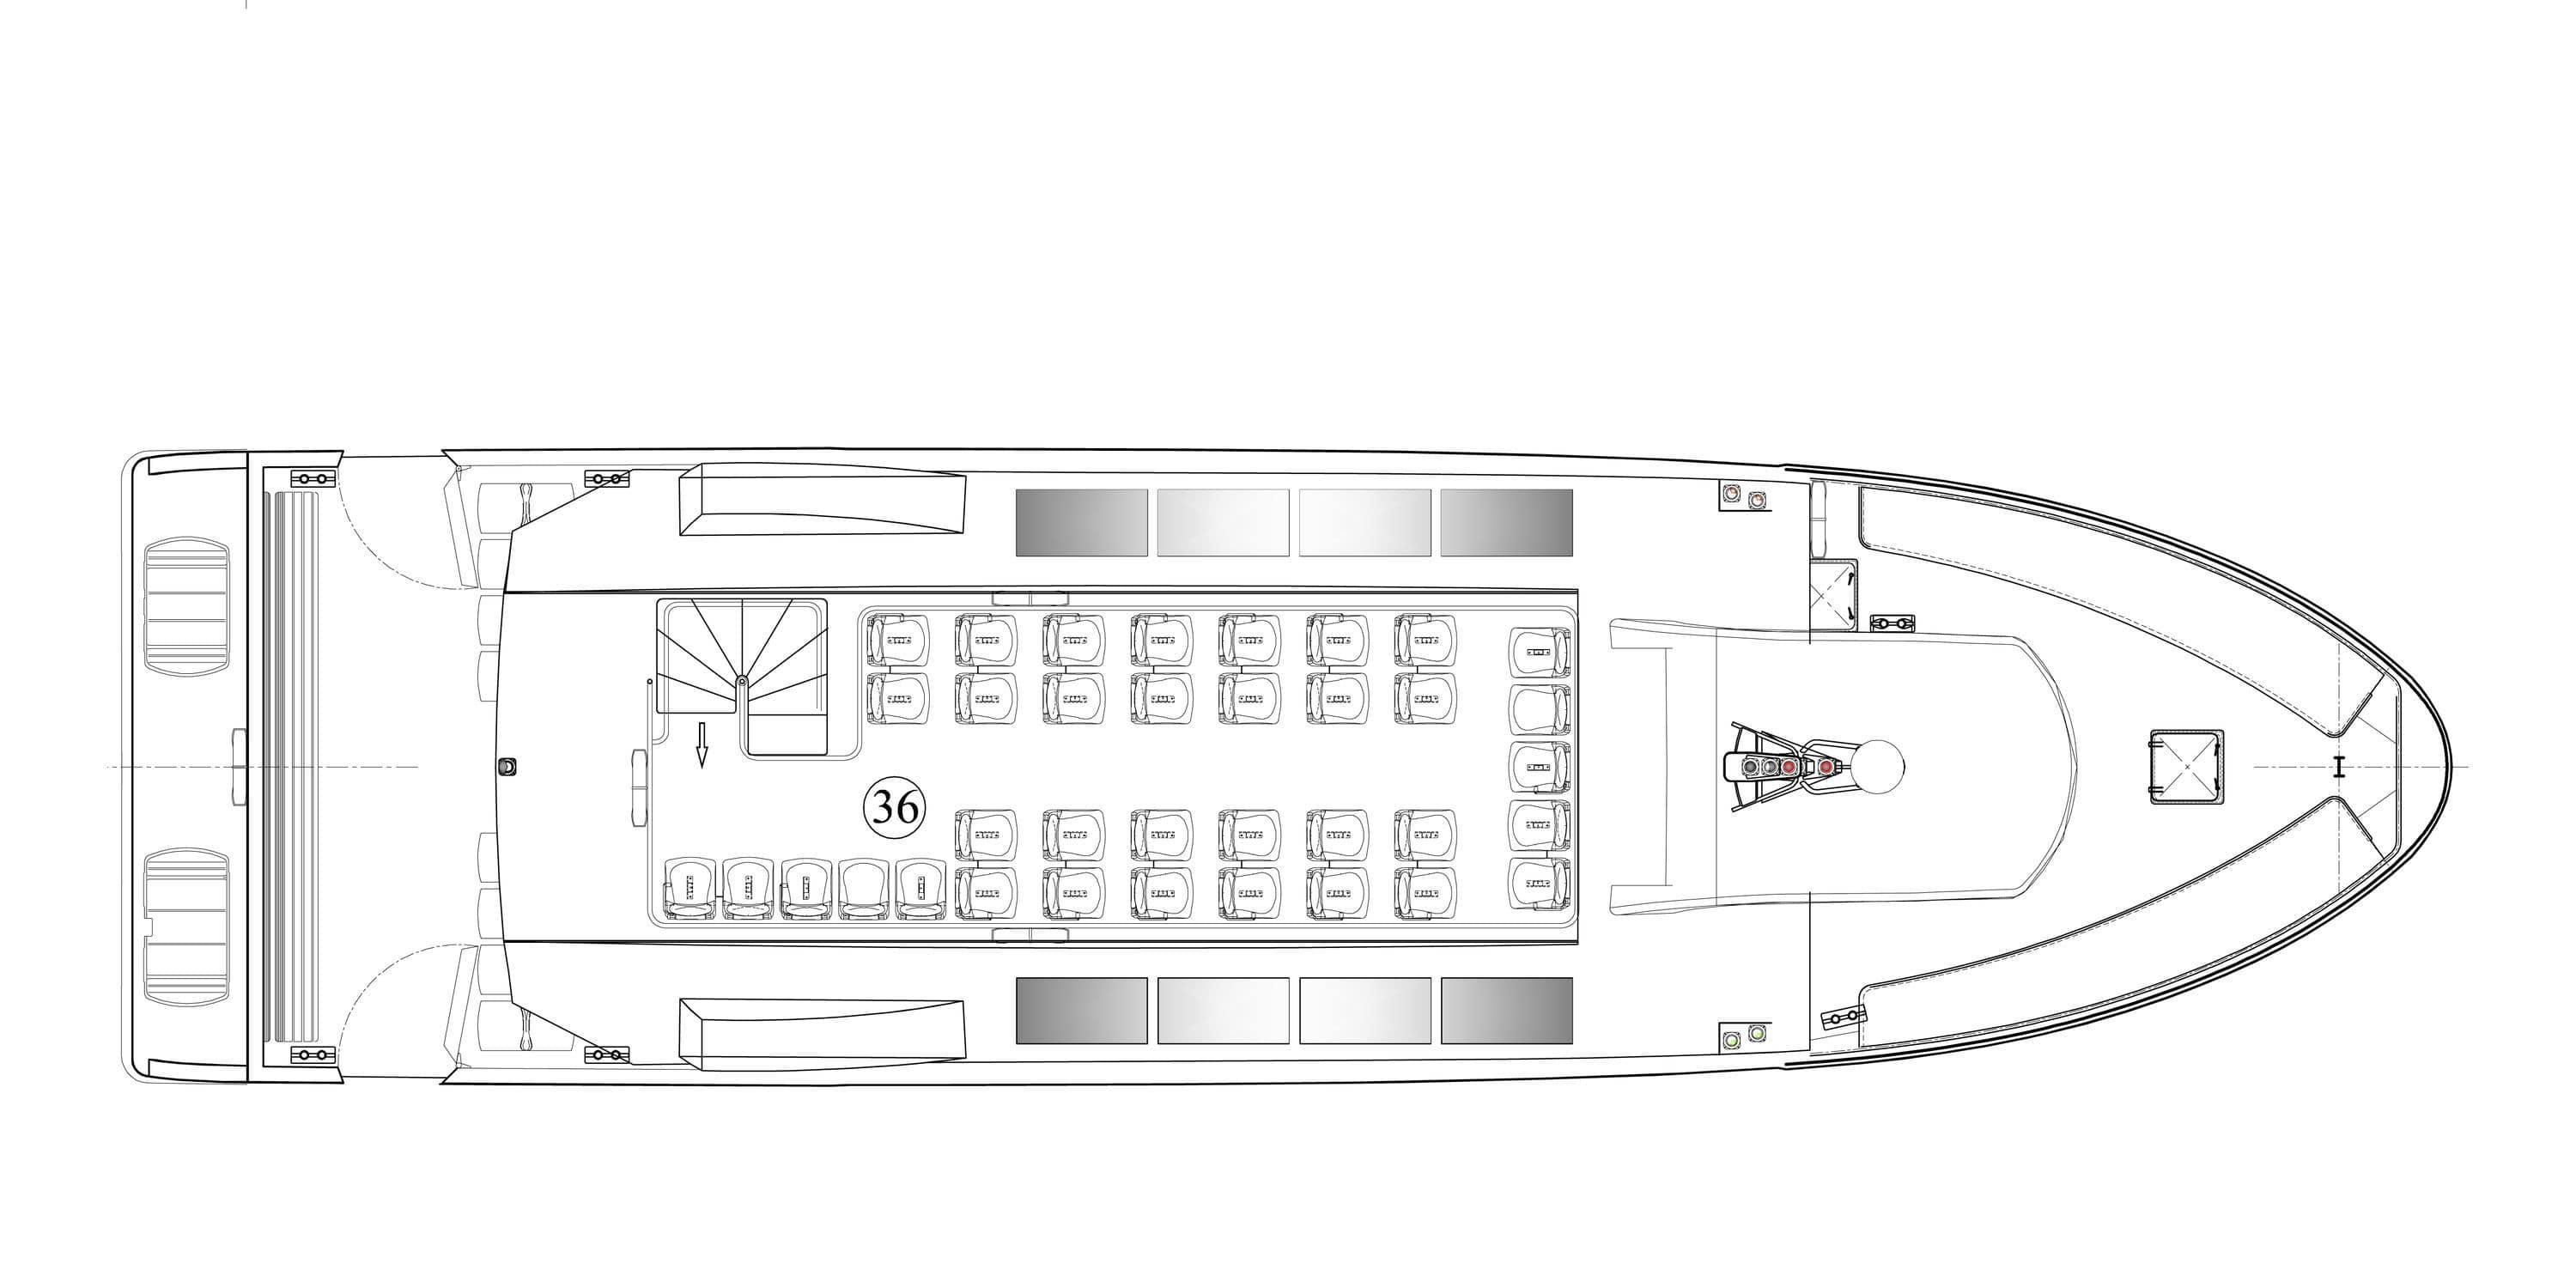 Marine Diesel Engine Diagram Passenger Boat Inboard Sel Electric Hybrid Aluminum Mono Of Marine Diesel Engine Diagram